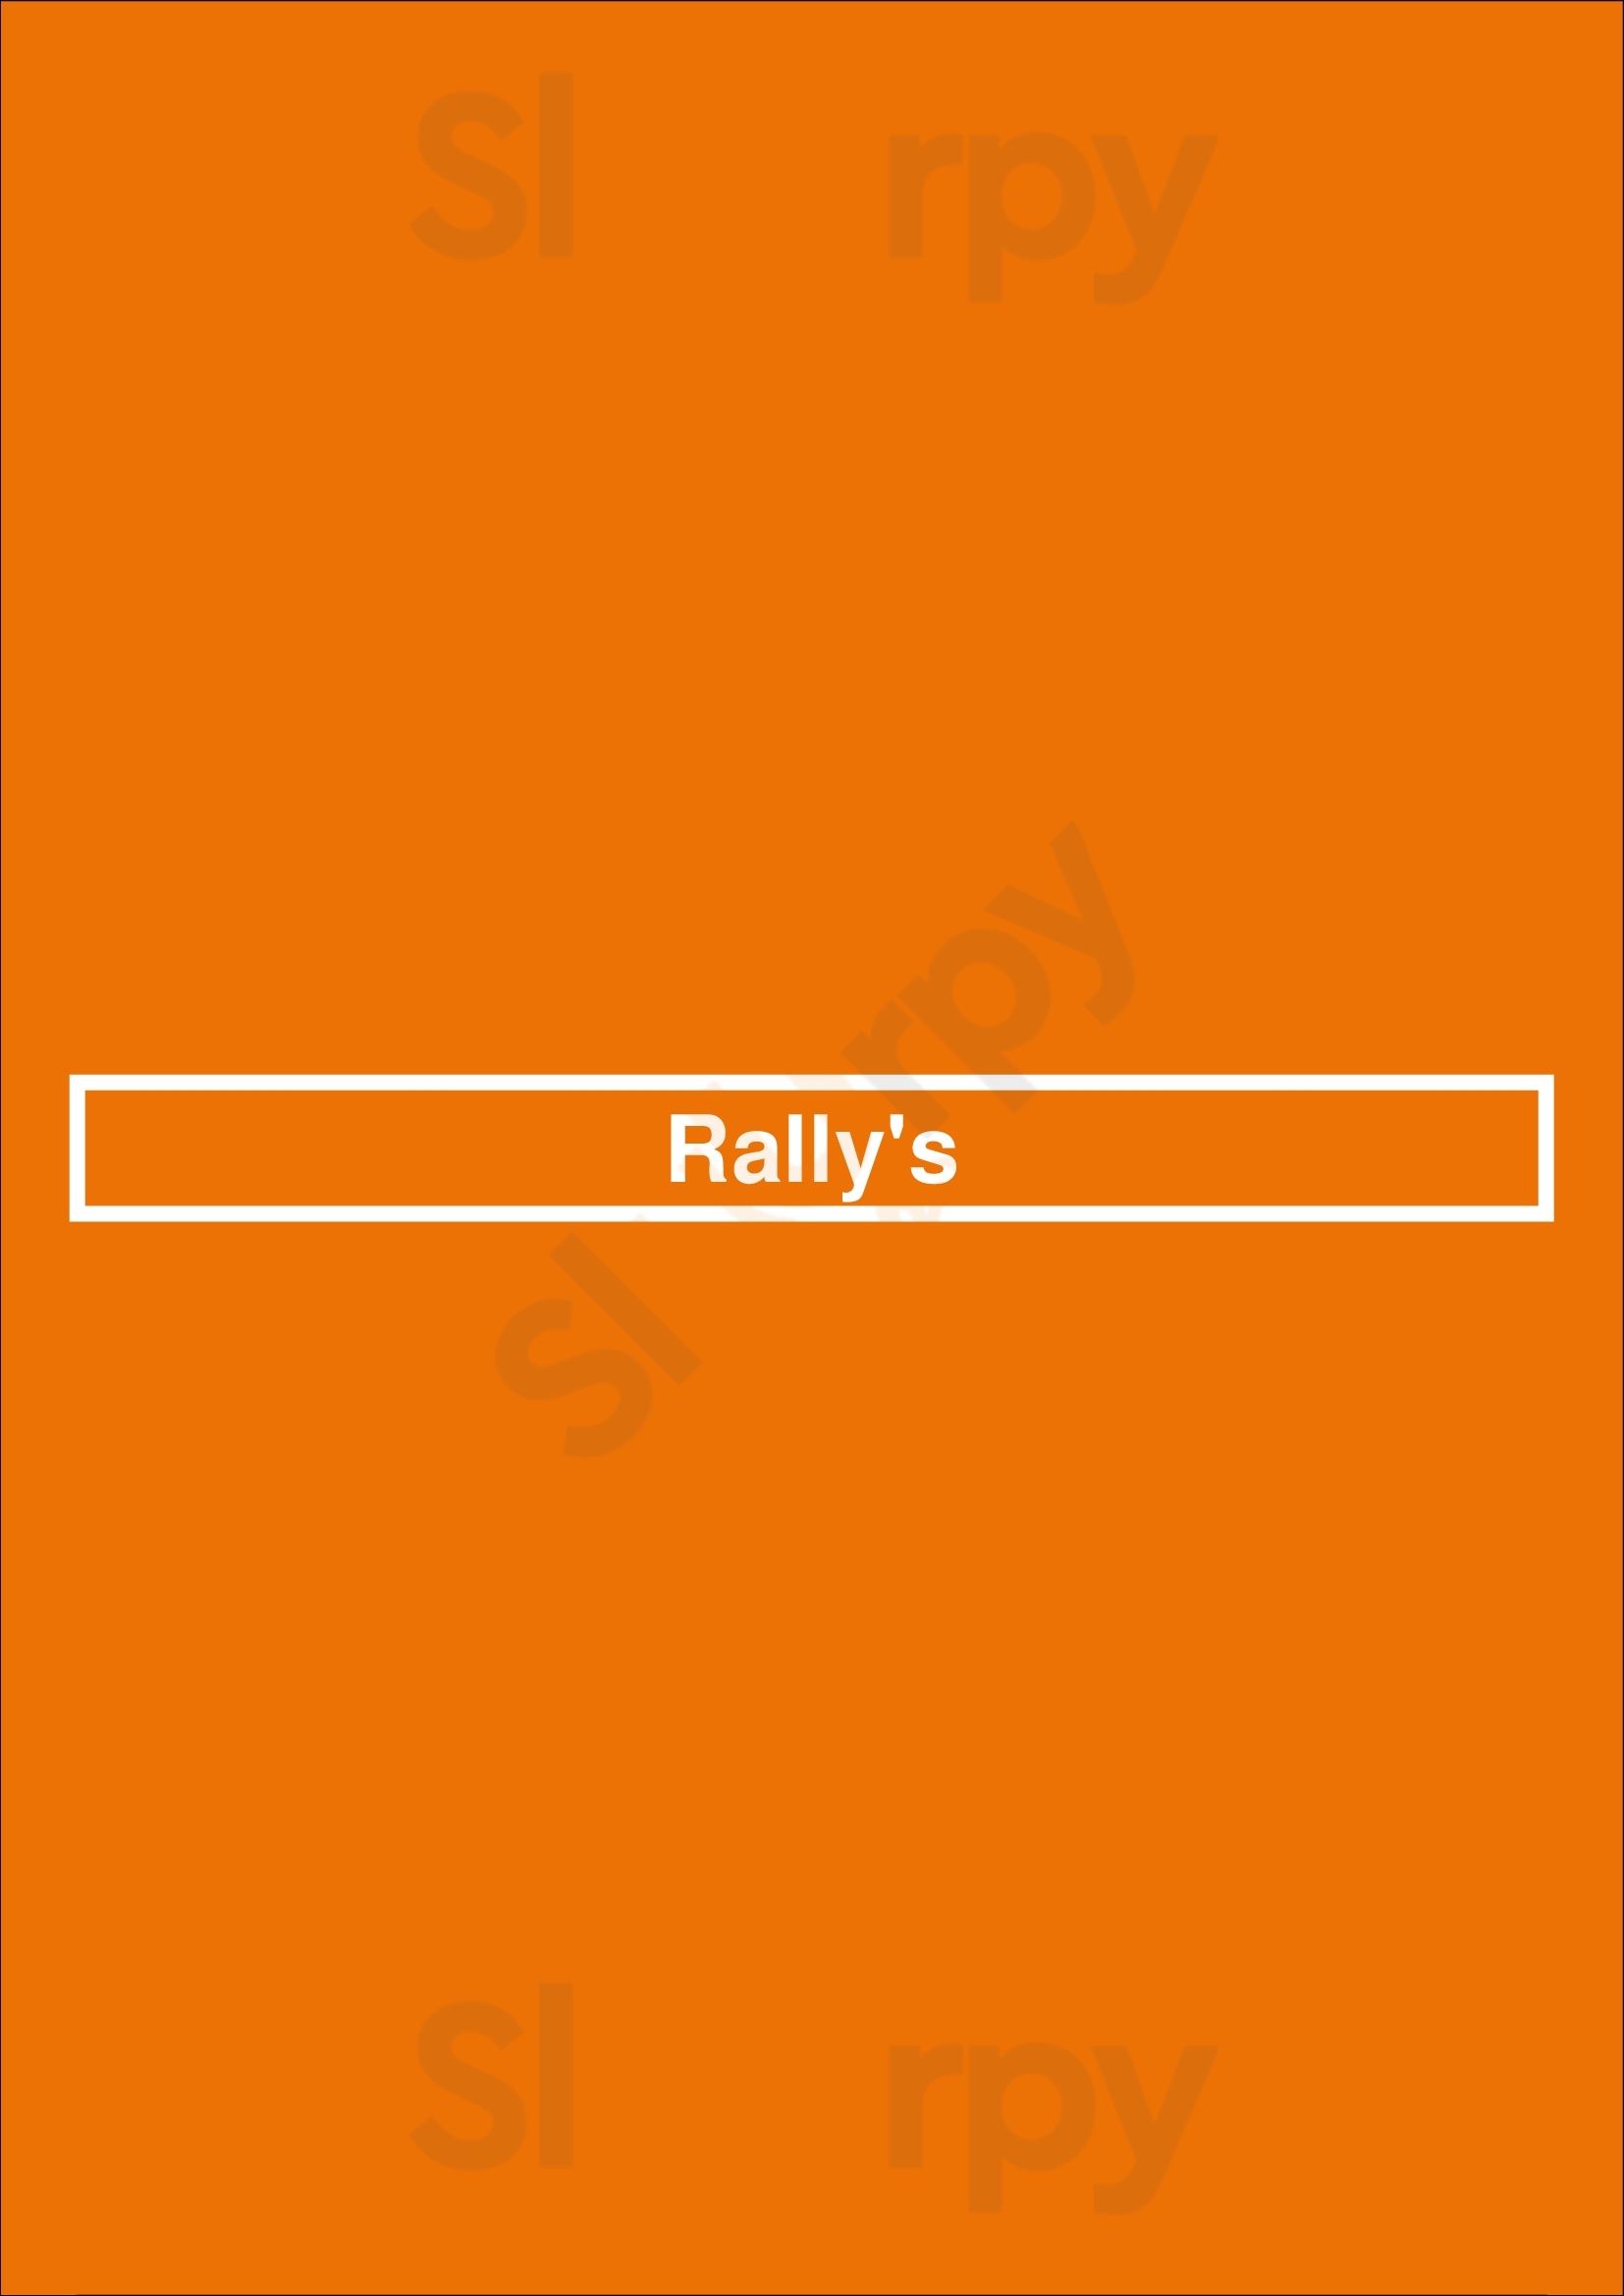 Rally's Cleveland Menu - 1